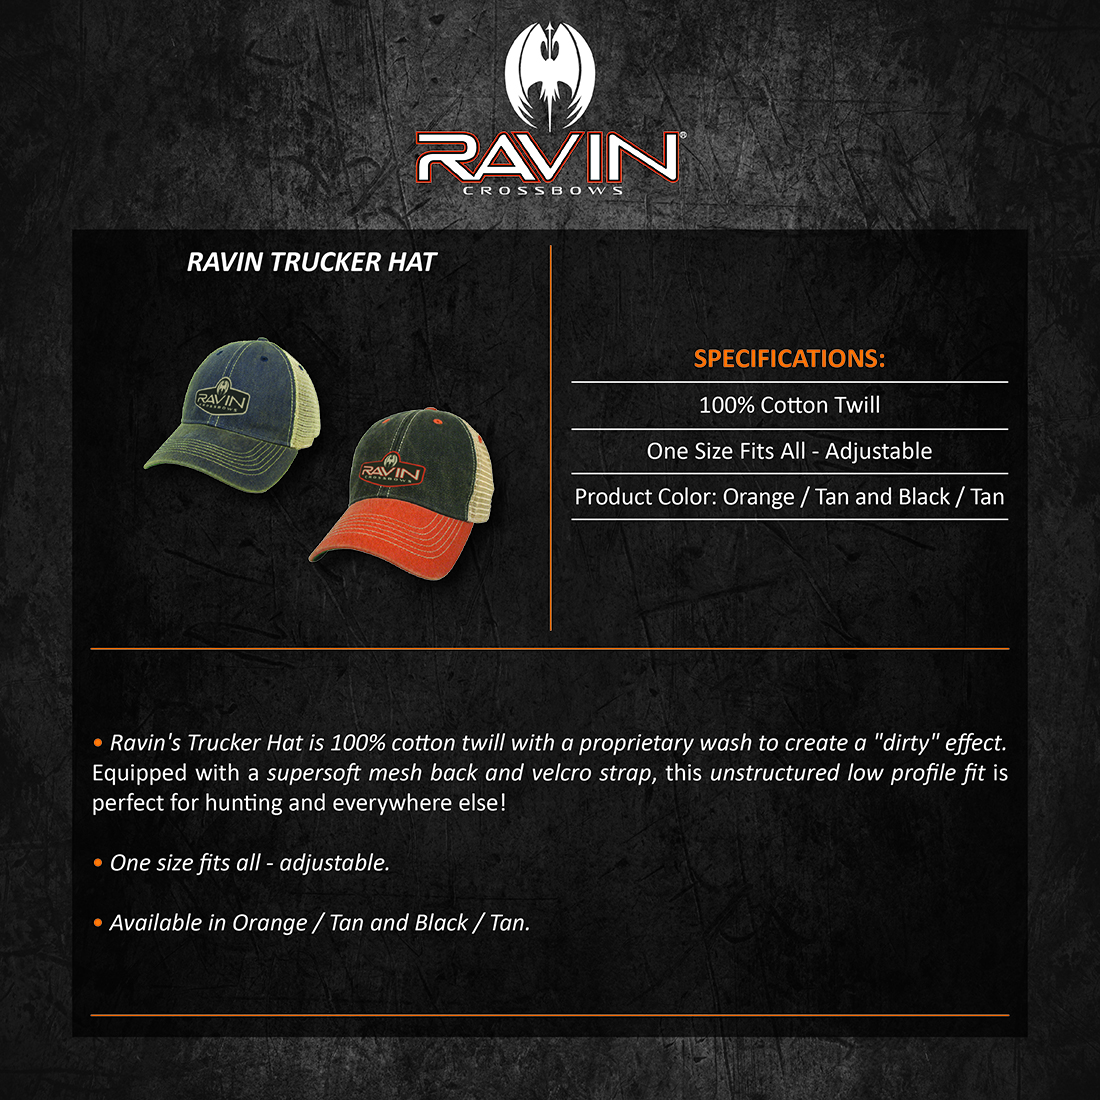 Ravin_Trucker_Hat_Product_Description